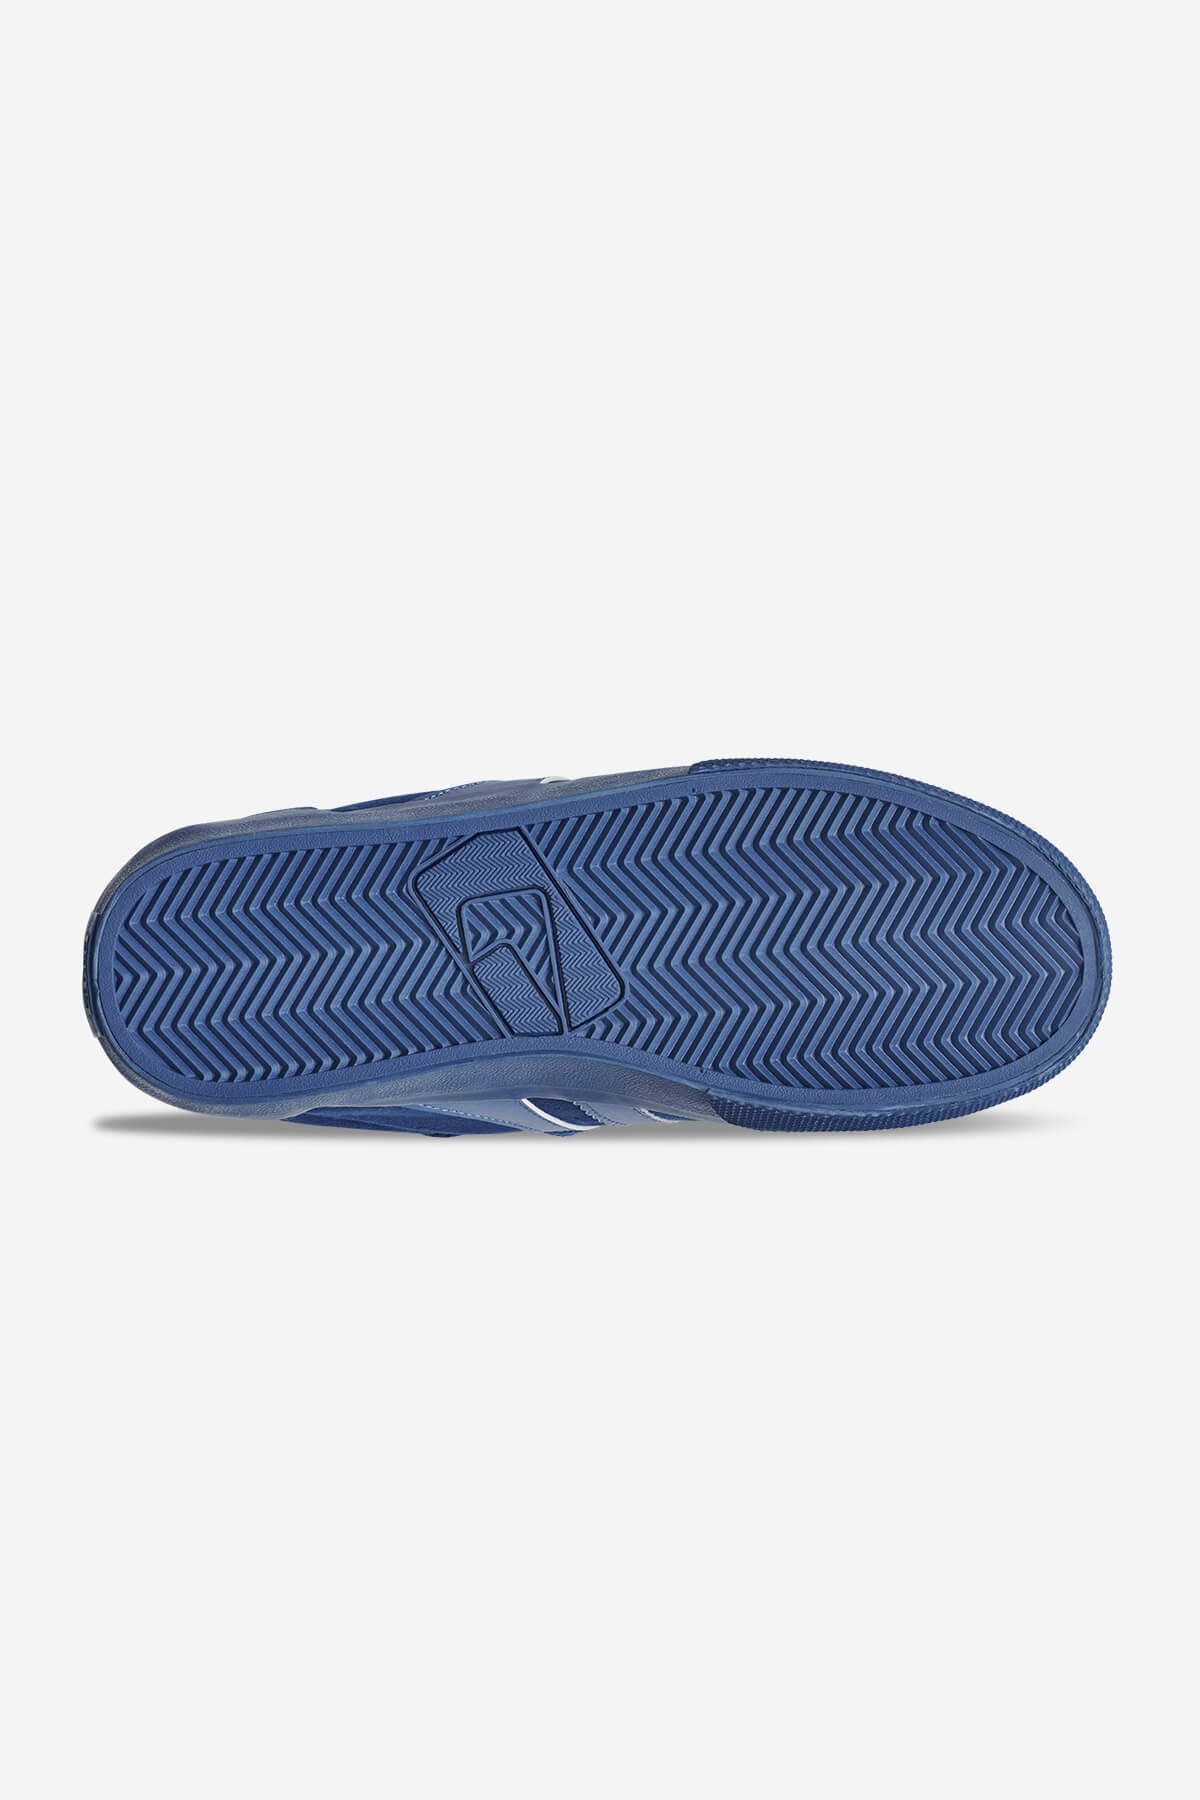 encore-2 blue gold dip skateboard Schuhe